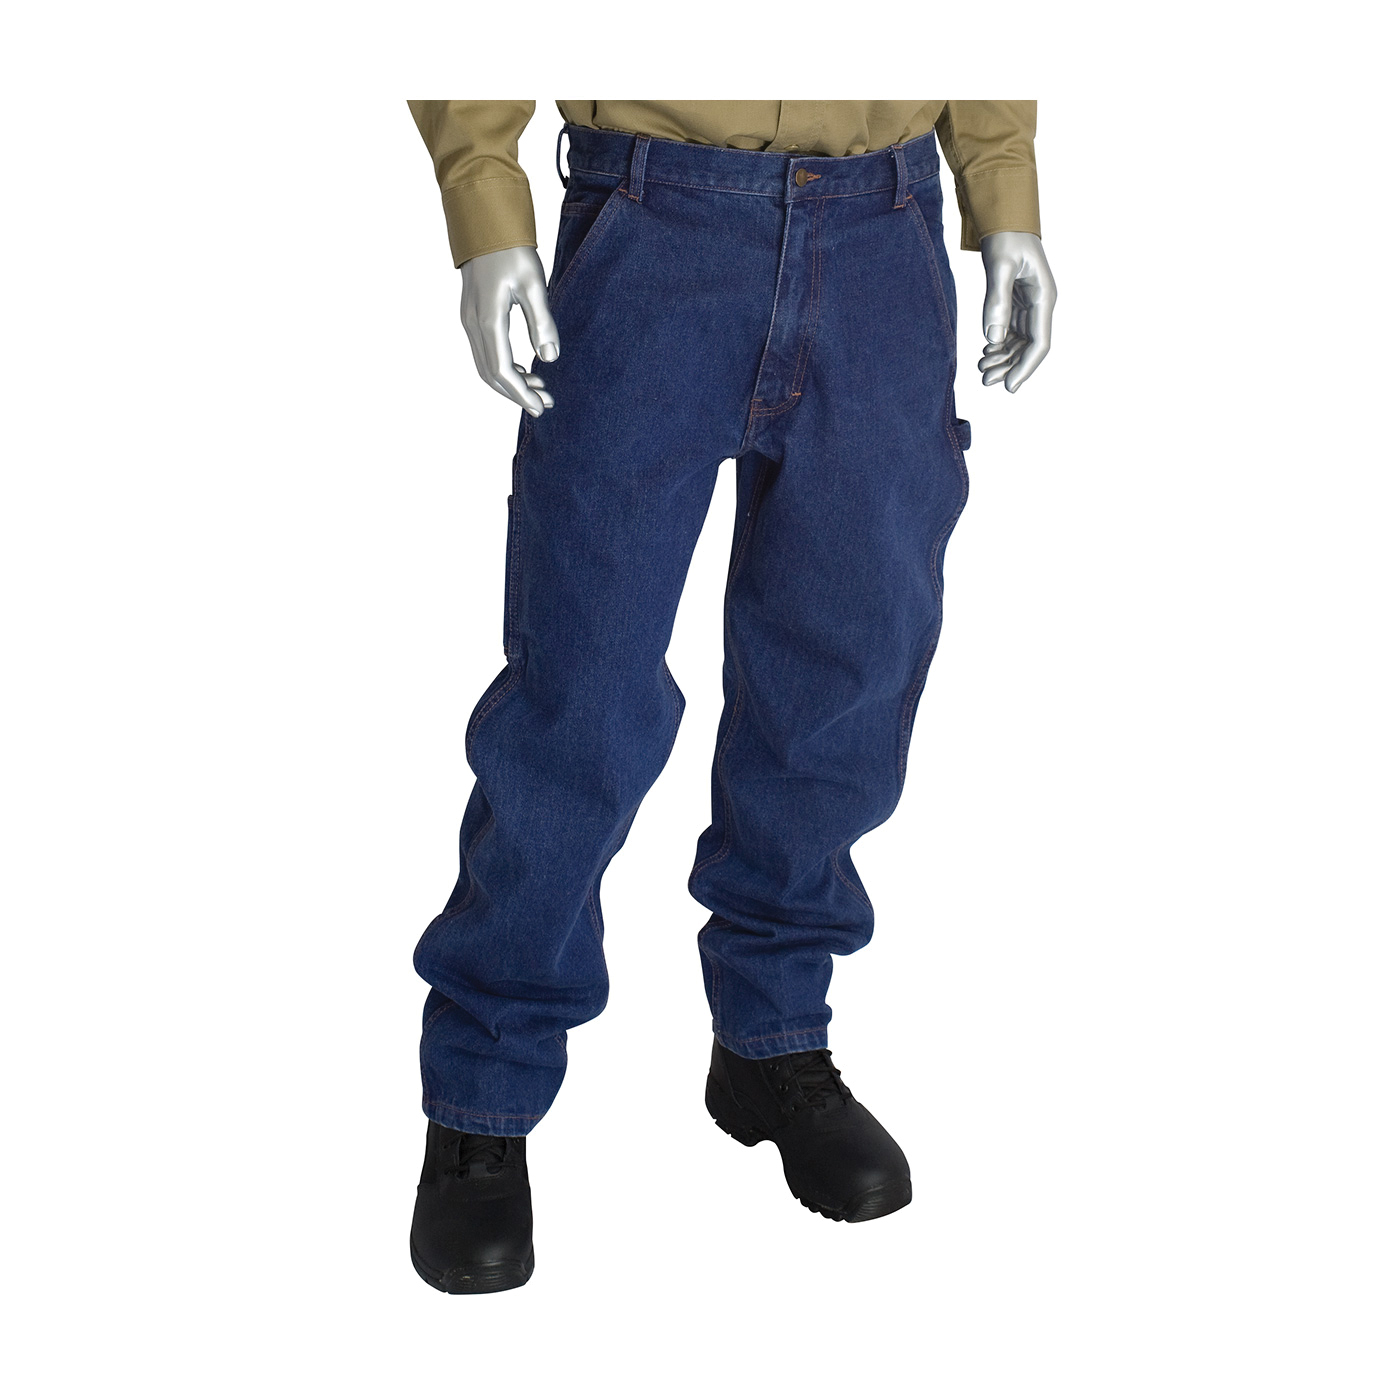 PIP® 385-FRCJ-3836 Carpenter Jeans, 38 in Waist, 36 in L Inseam, Blue Denim, Cotton